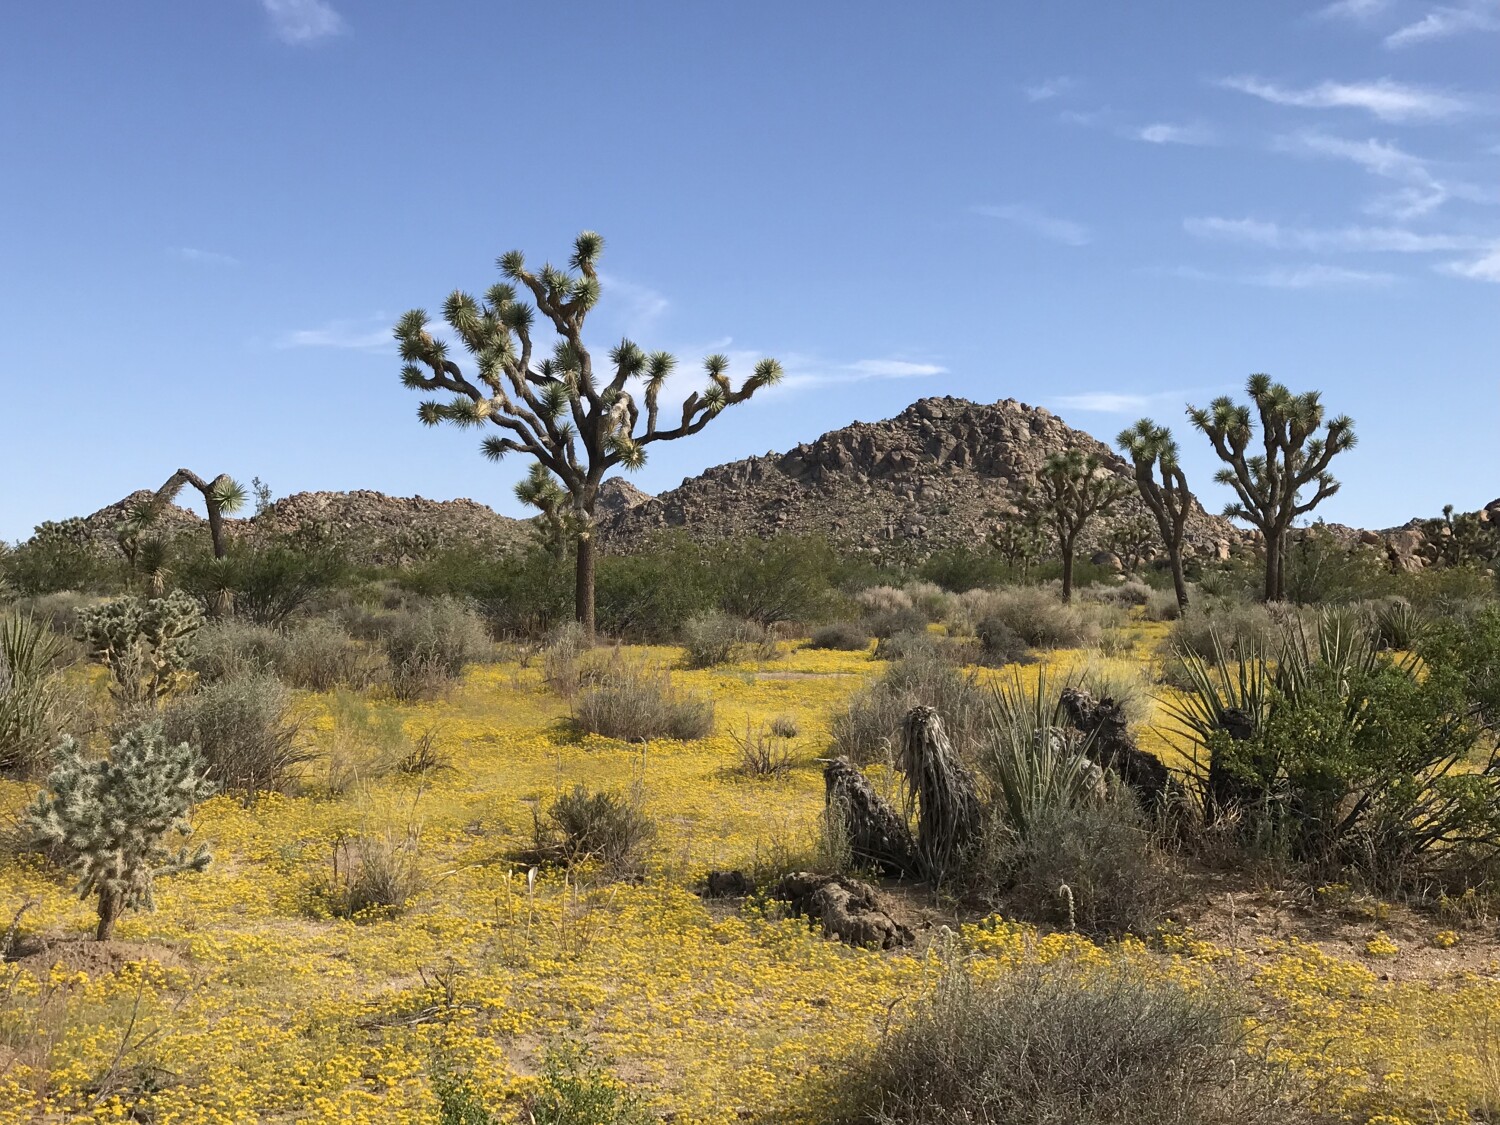 Summer superbloom? Showy flowers pop in Mojave Desert